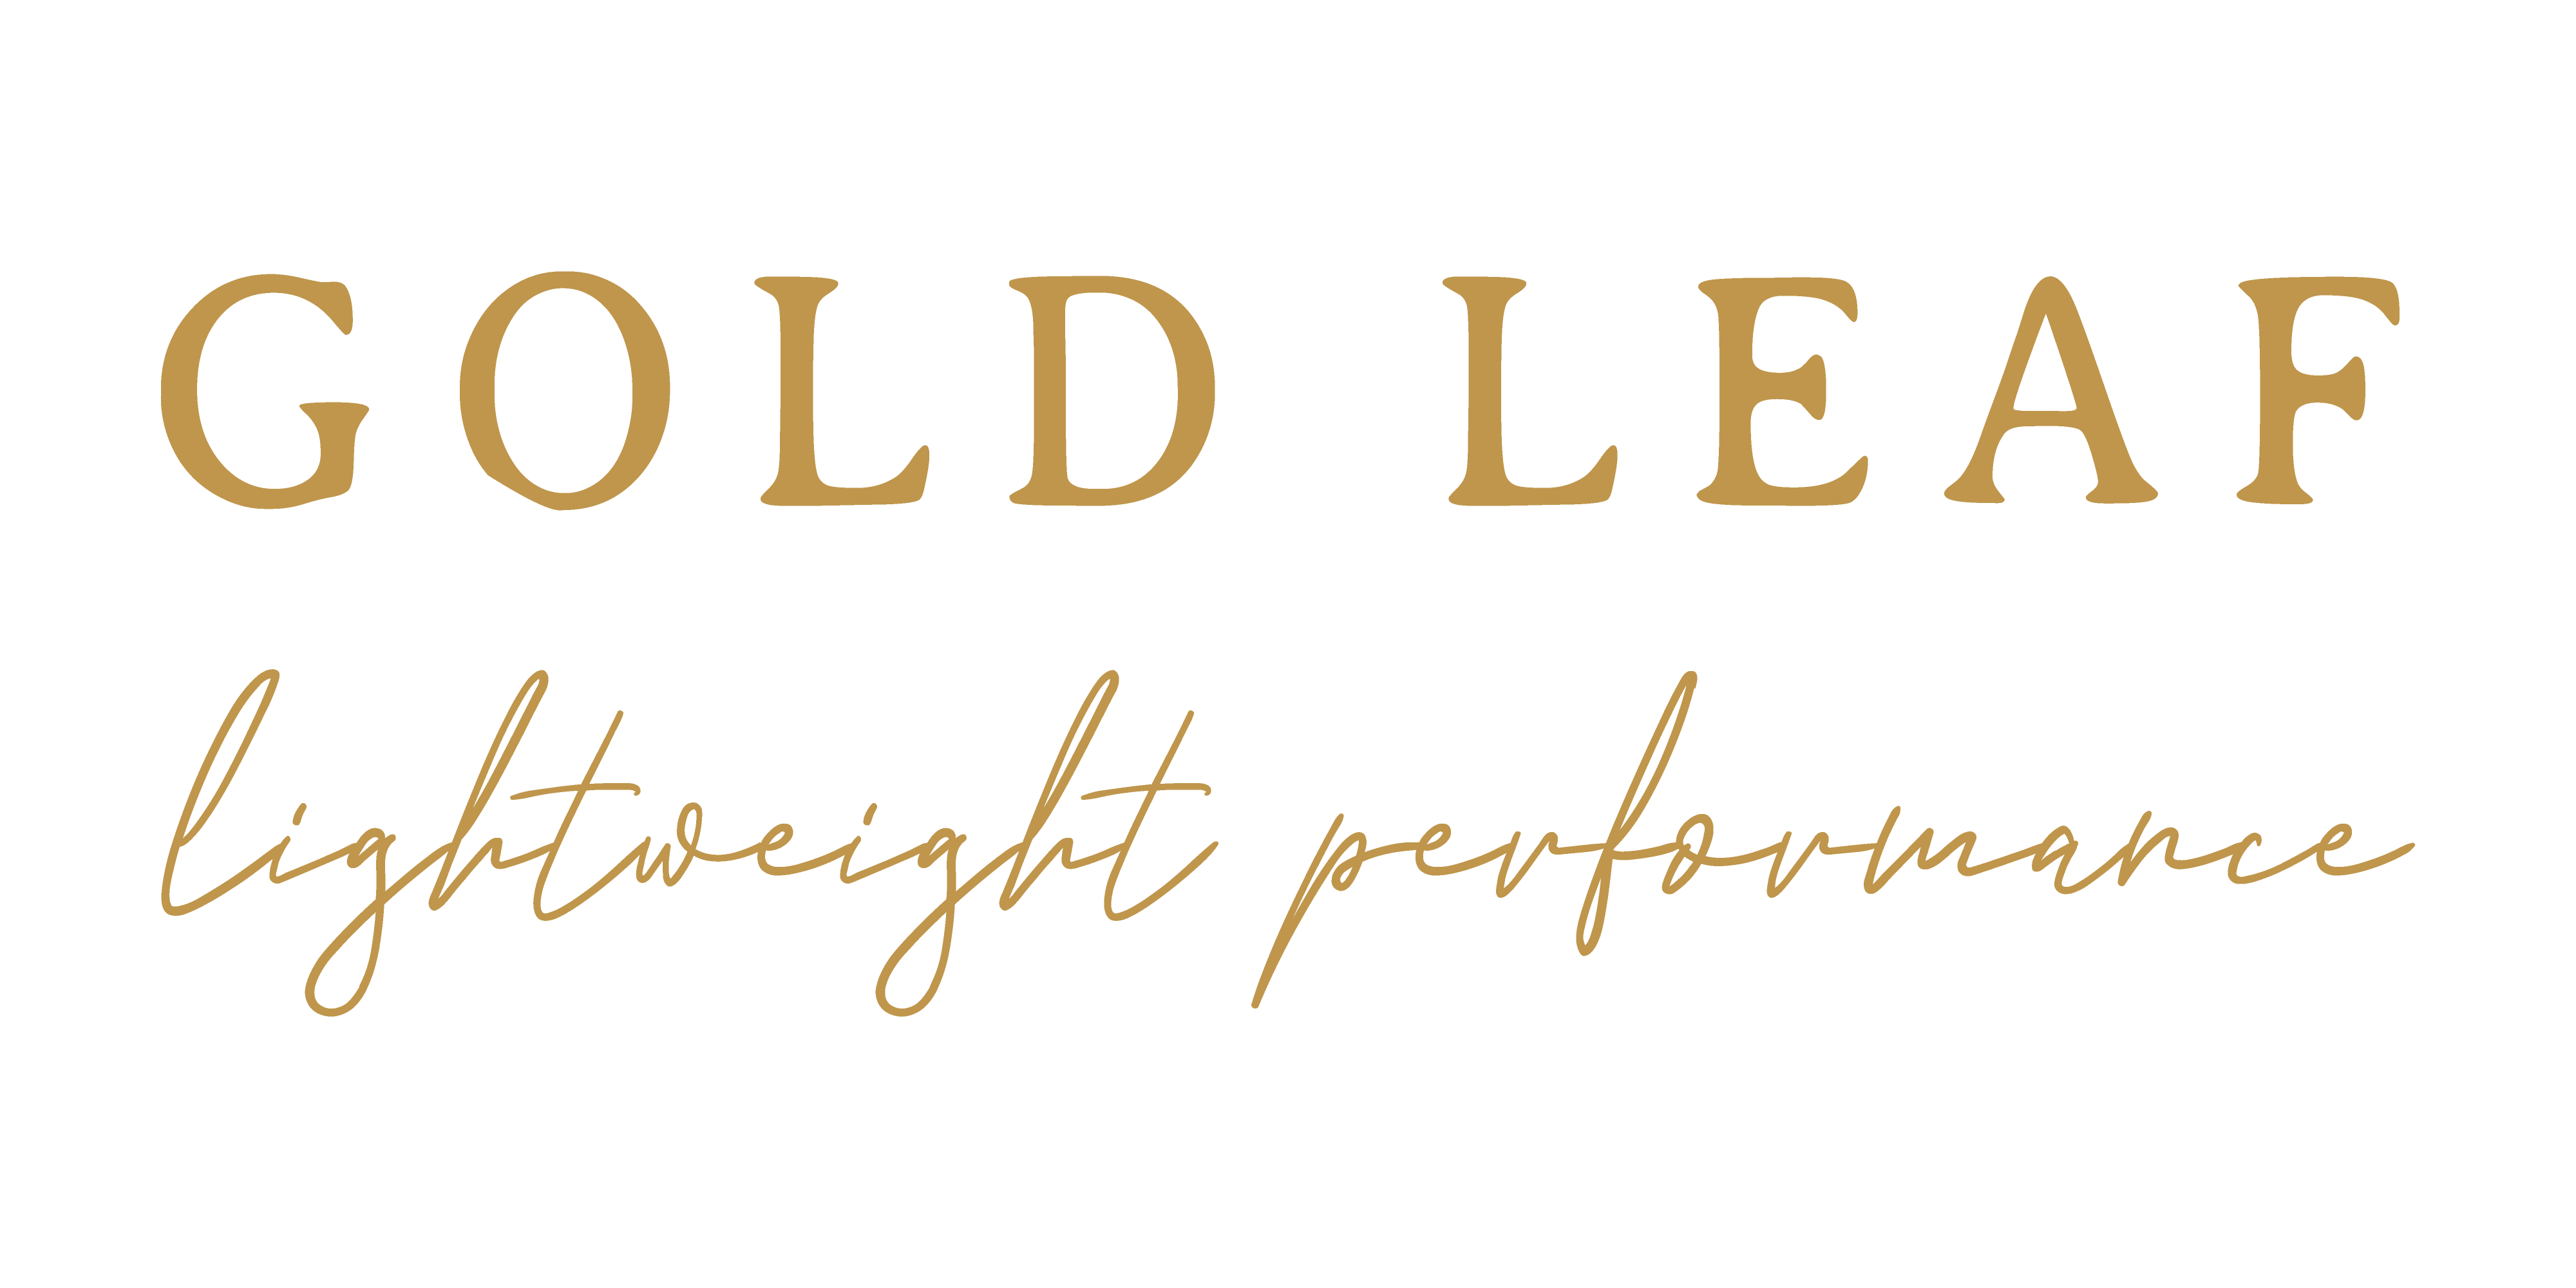 GOLD LEAF lightweight performance